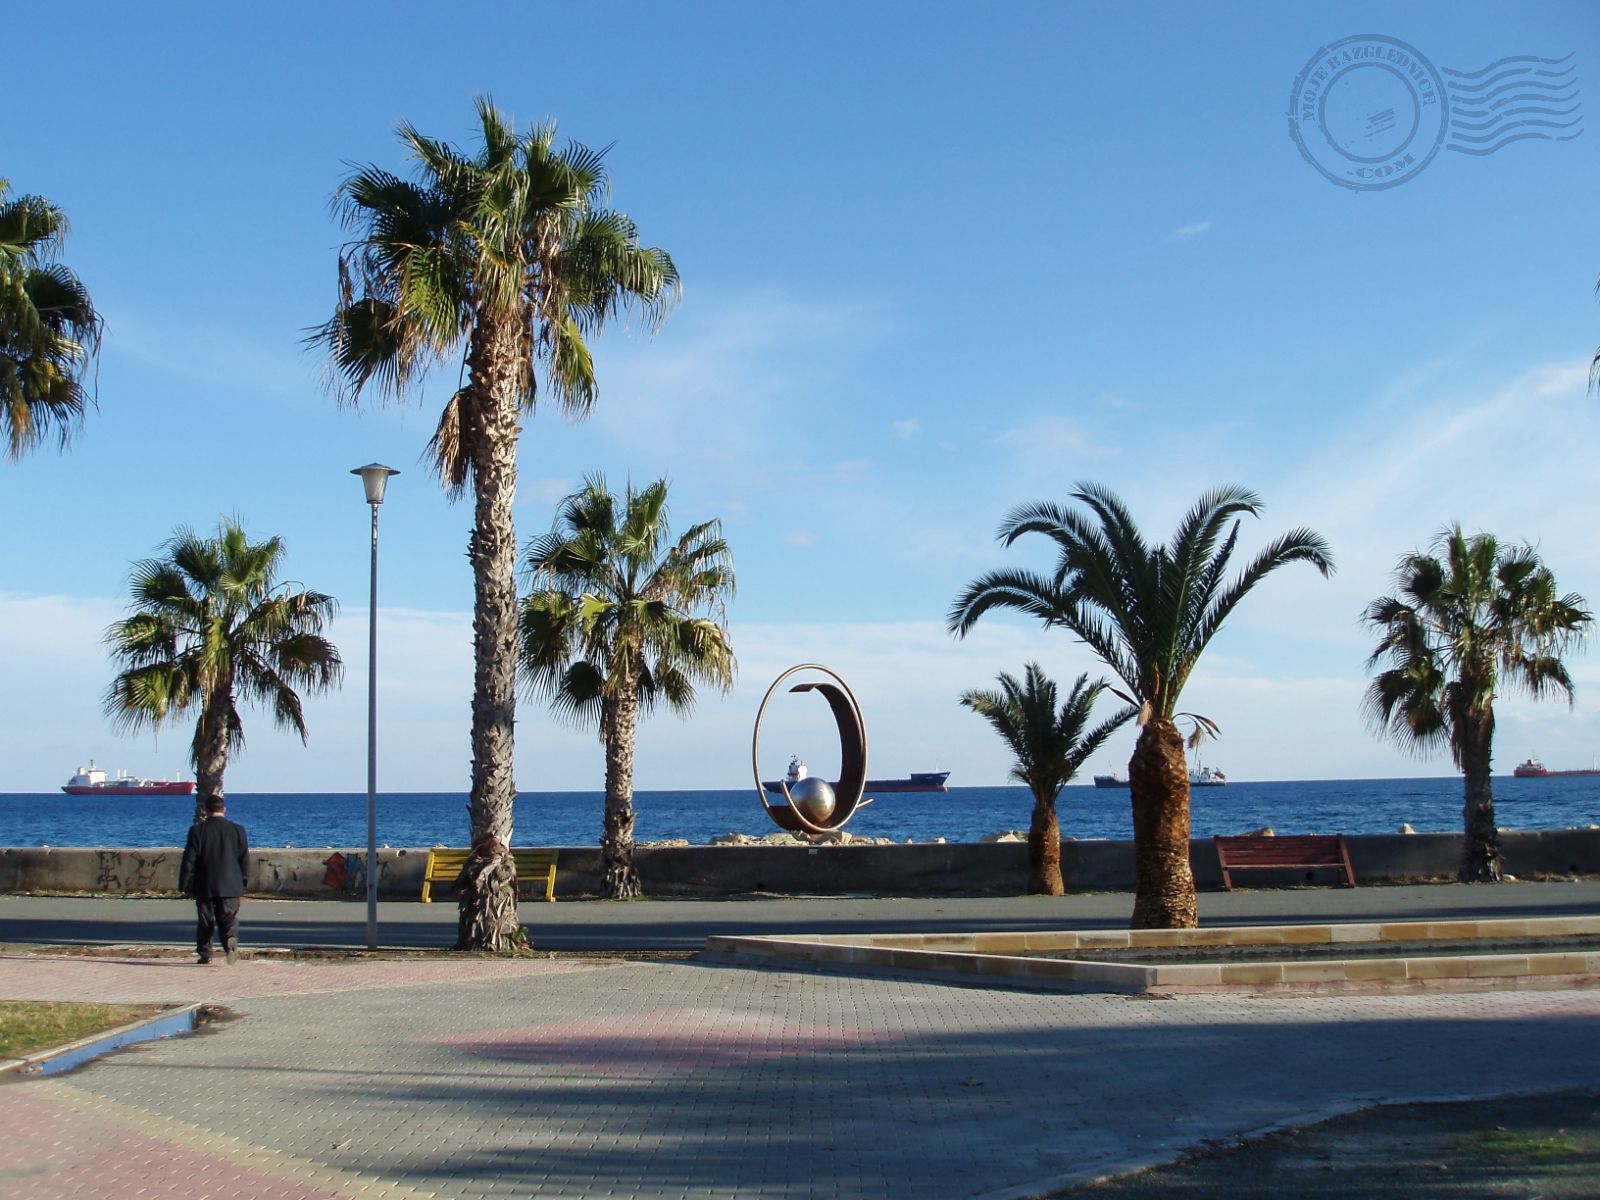 6. Dan - Limassol (Cyprus)